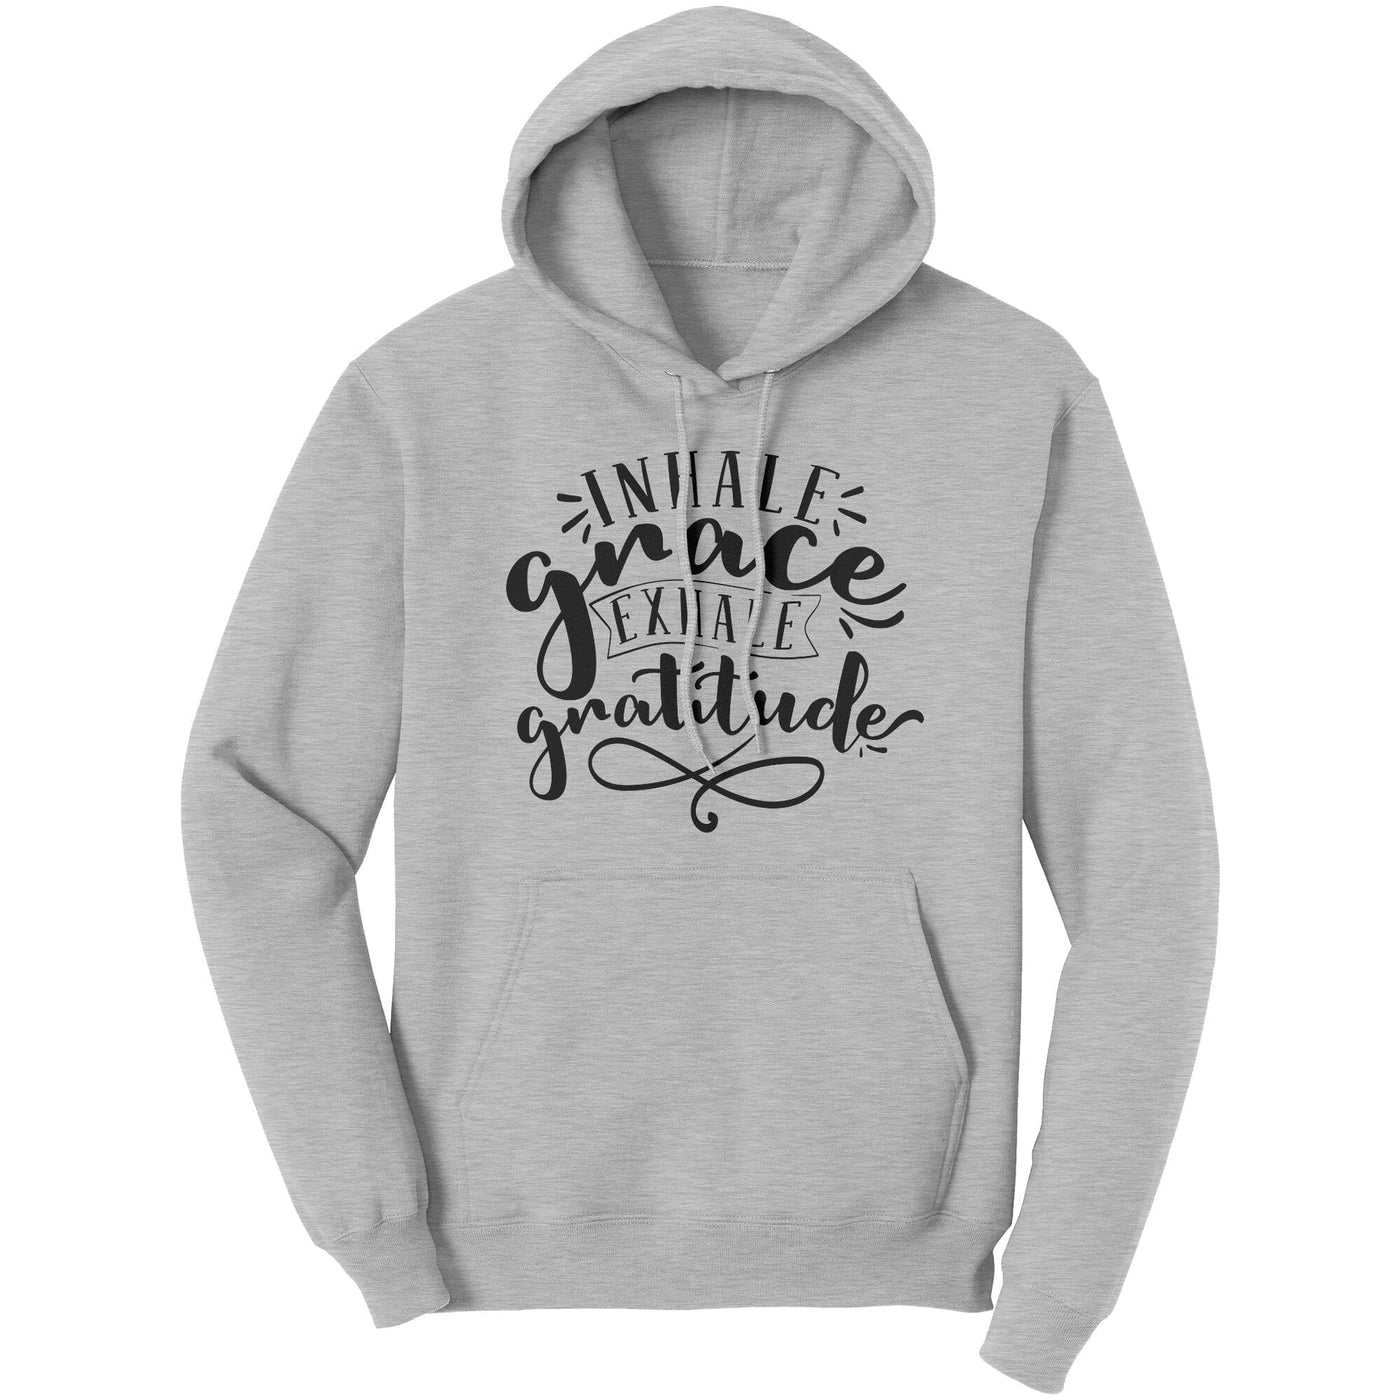 Graphic Hoodie Sweatshirt Inhale Grace Exhale Gratitude Hooded Shirt - Unisex |